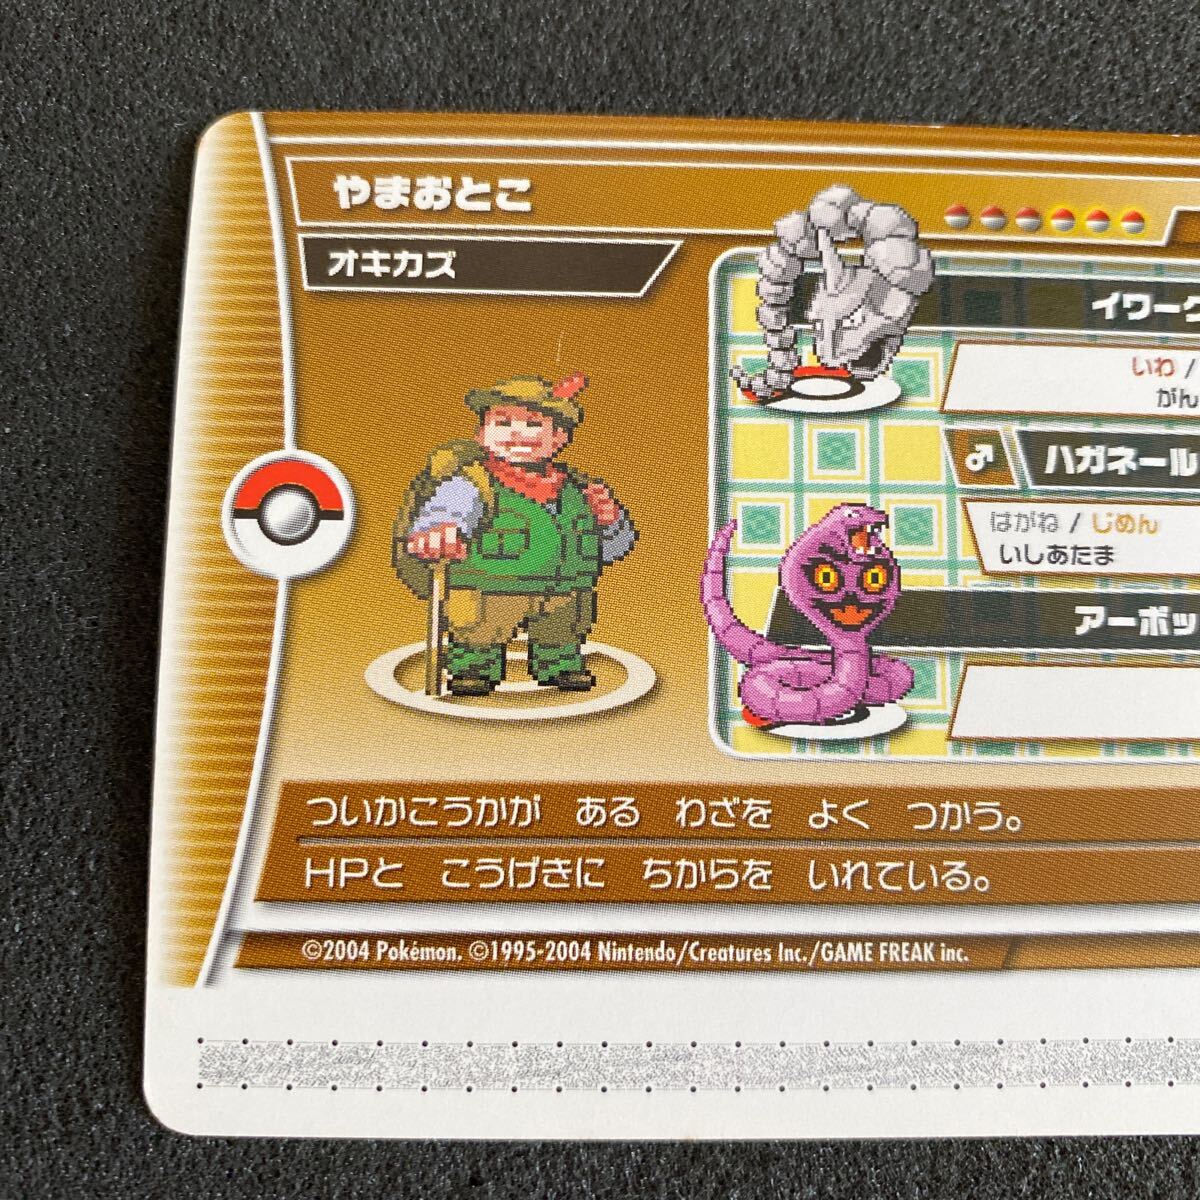  Pokemon Battle Card e + emerald sweatshirt card A031.....okikazpokemon GBA game anime Carddas average on ~ staple product 